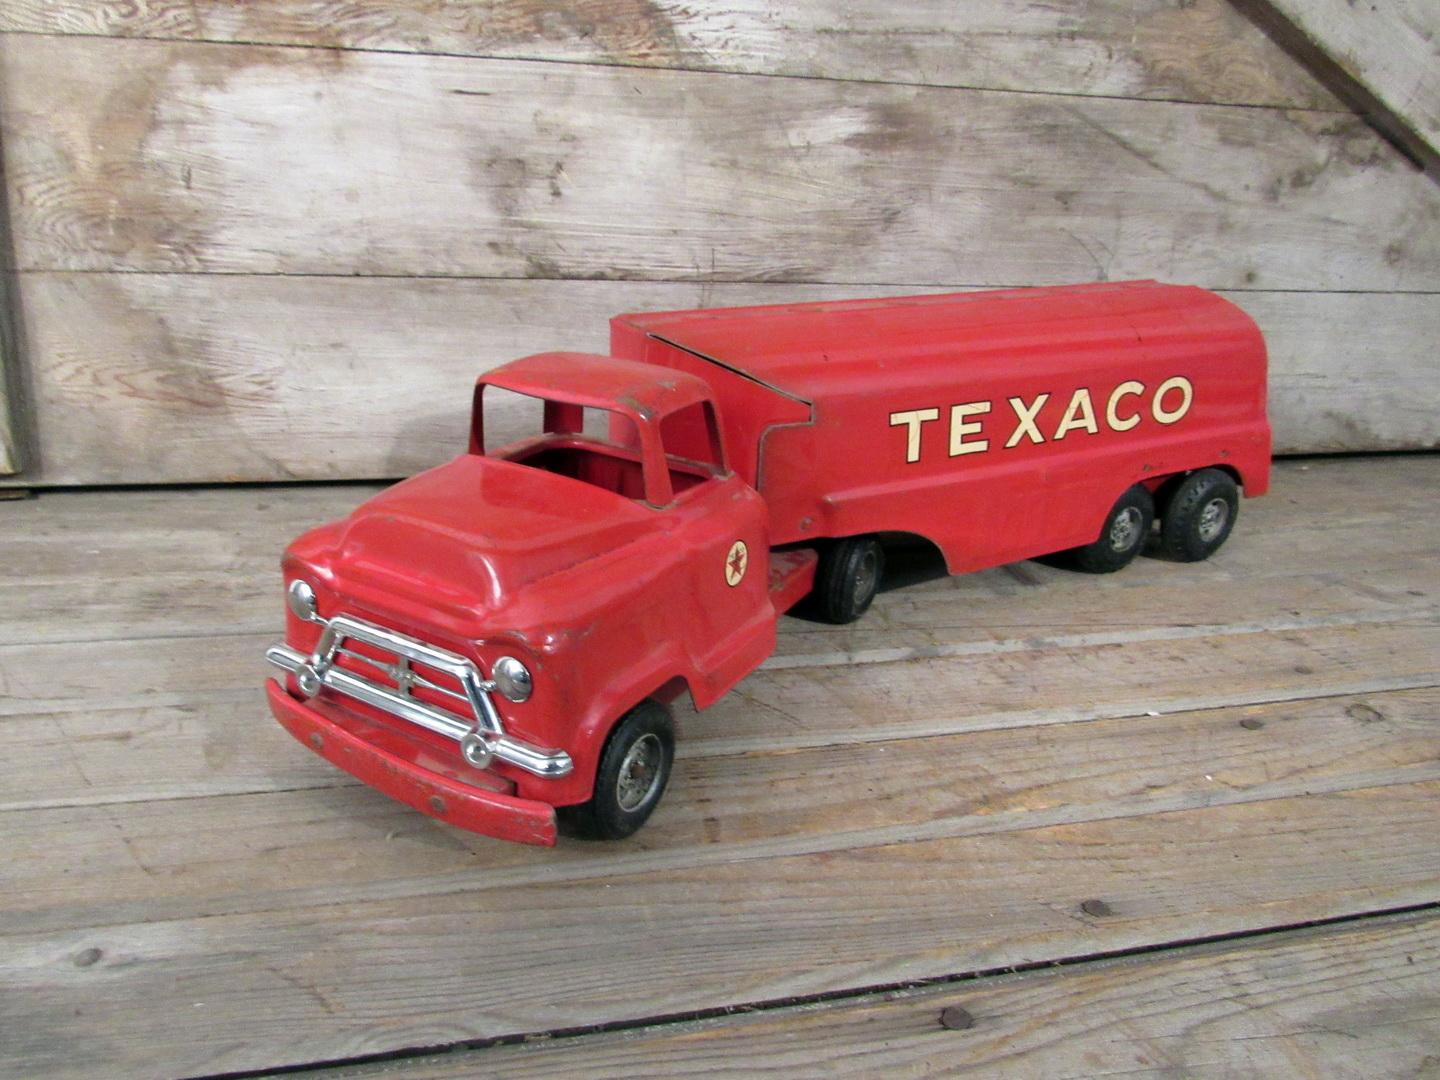 Vintage Texaco Steel Tank Truck with Original Box